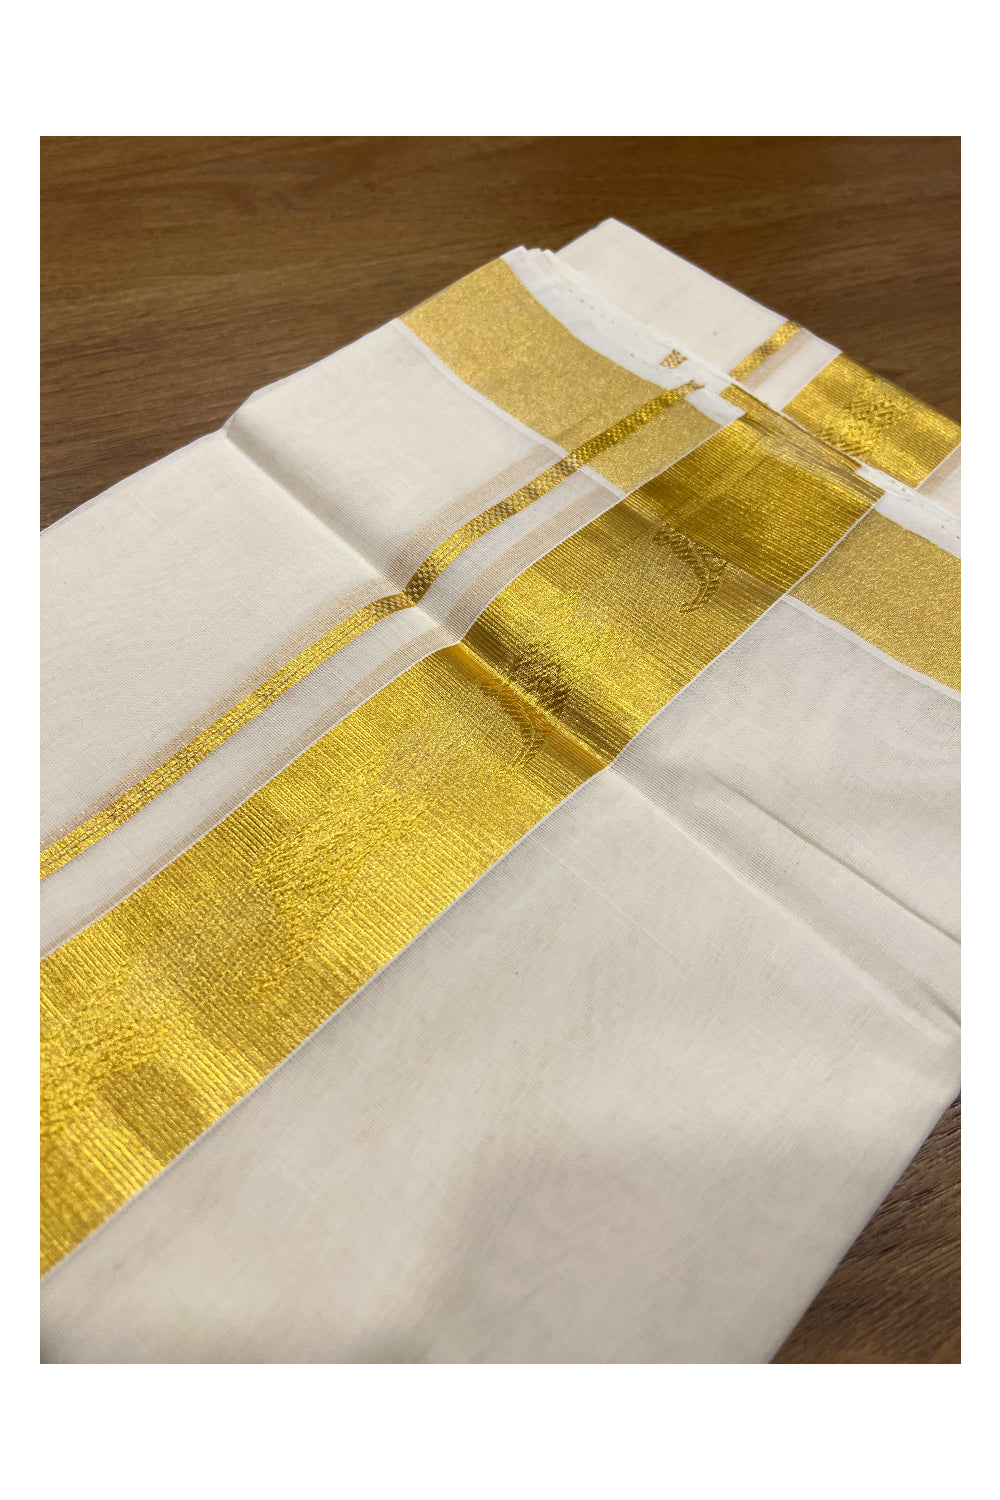 Southloom Premium Handloom Pure Cotton Wedding Mundu with Kasavu Woven Border (South Indian Dhoti)